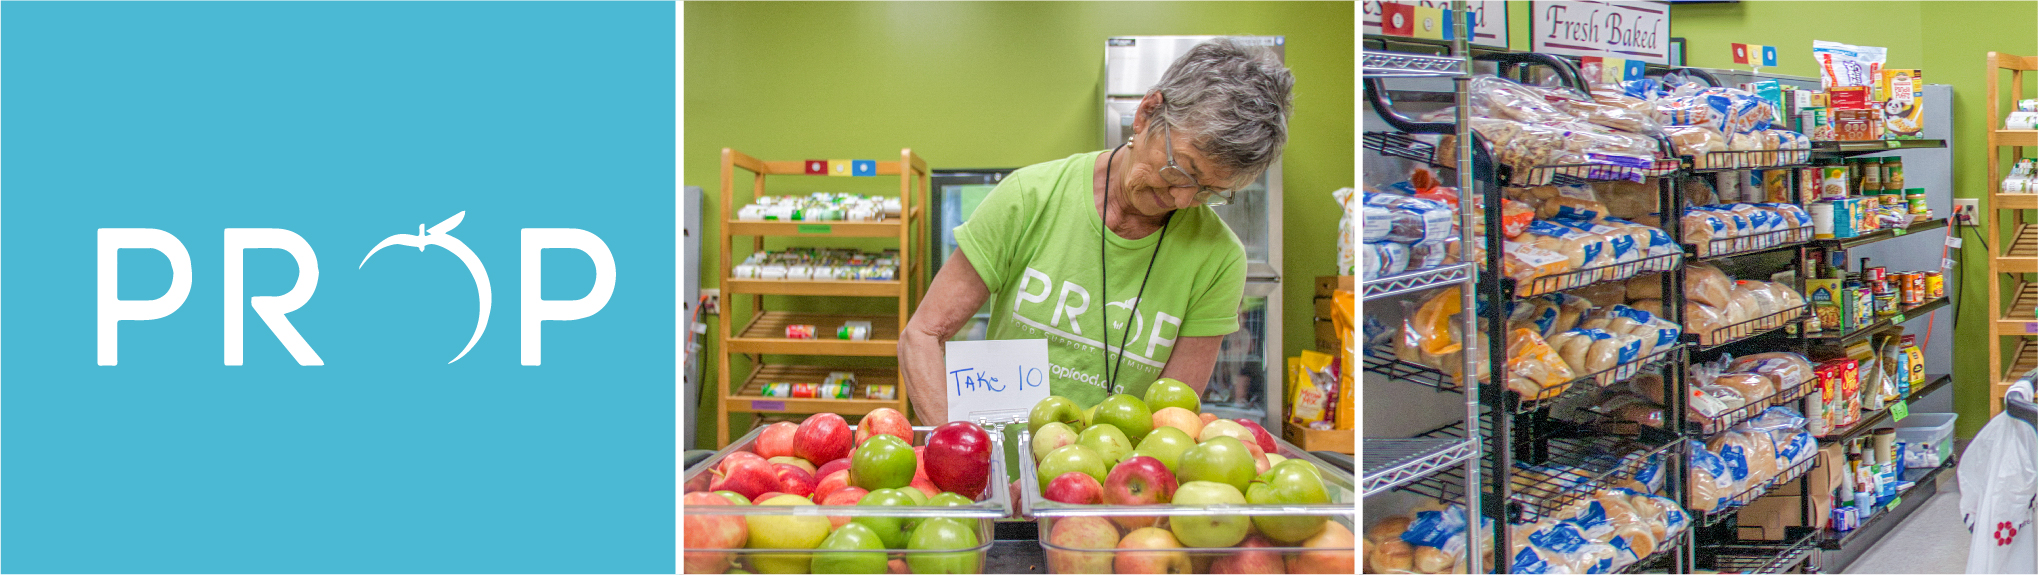 PROP Logo, Food Shelf Volunteer Packs Apples, Bread Shelves